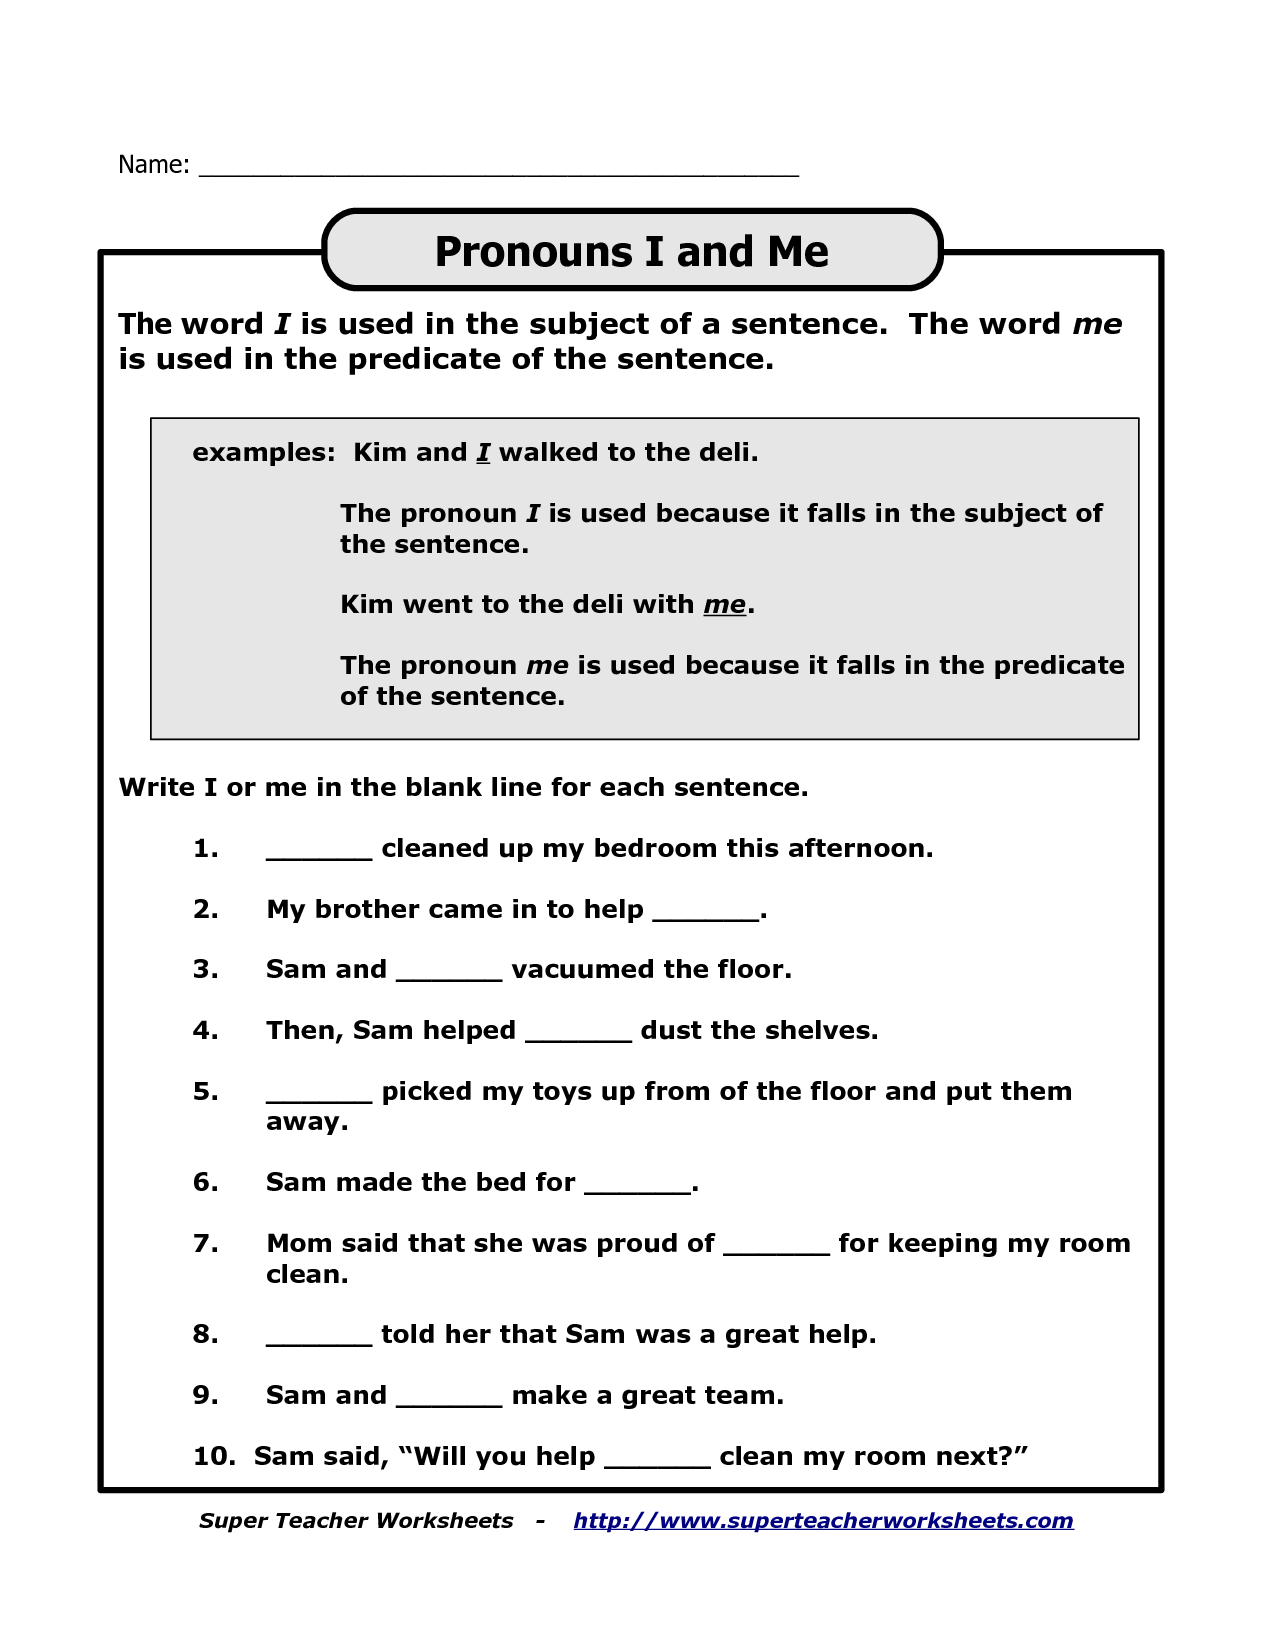 Pronouns I and Me Worksheet